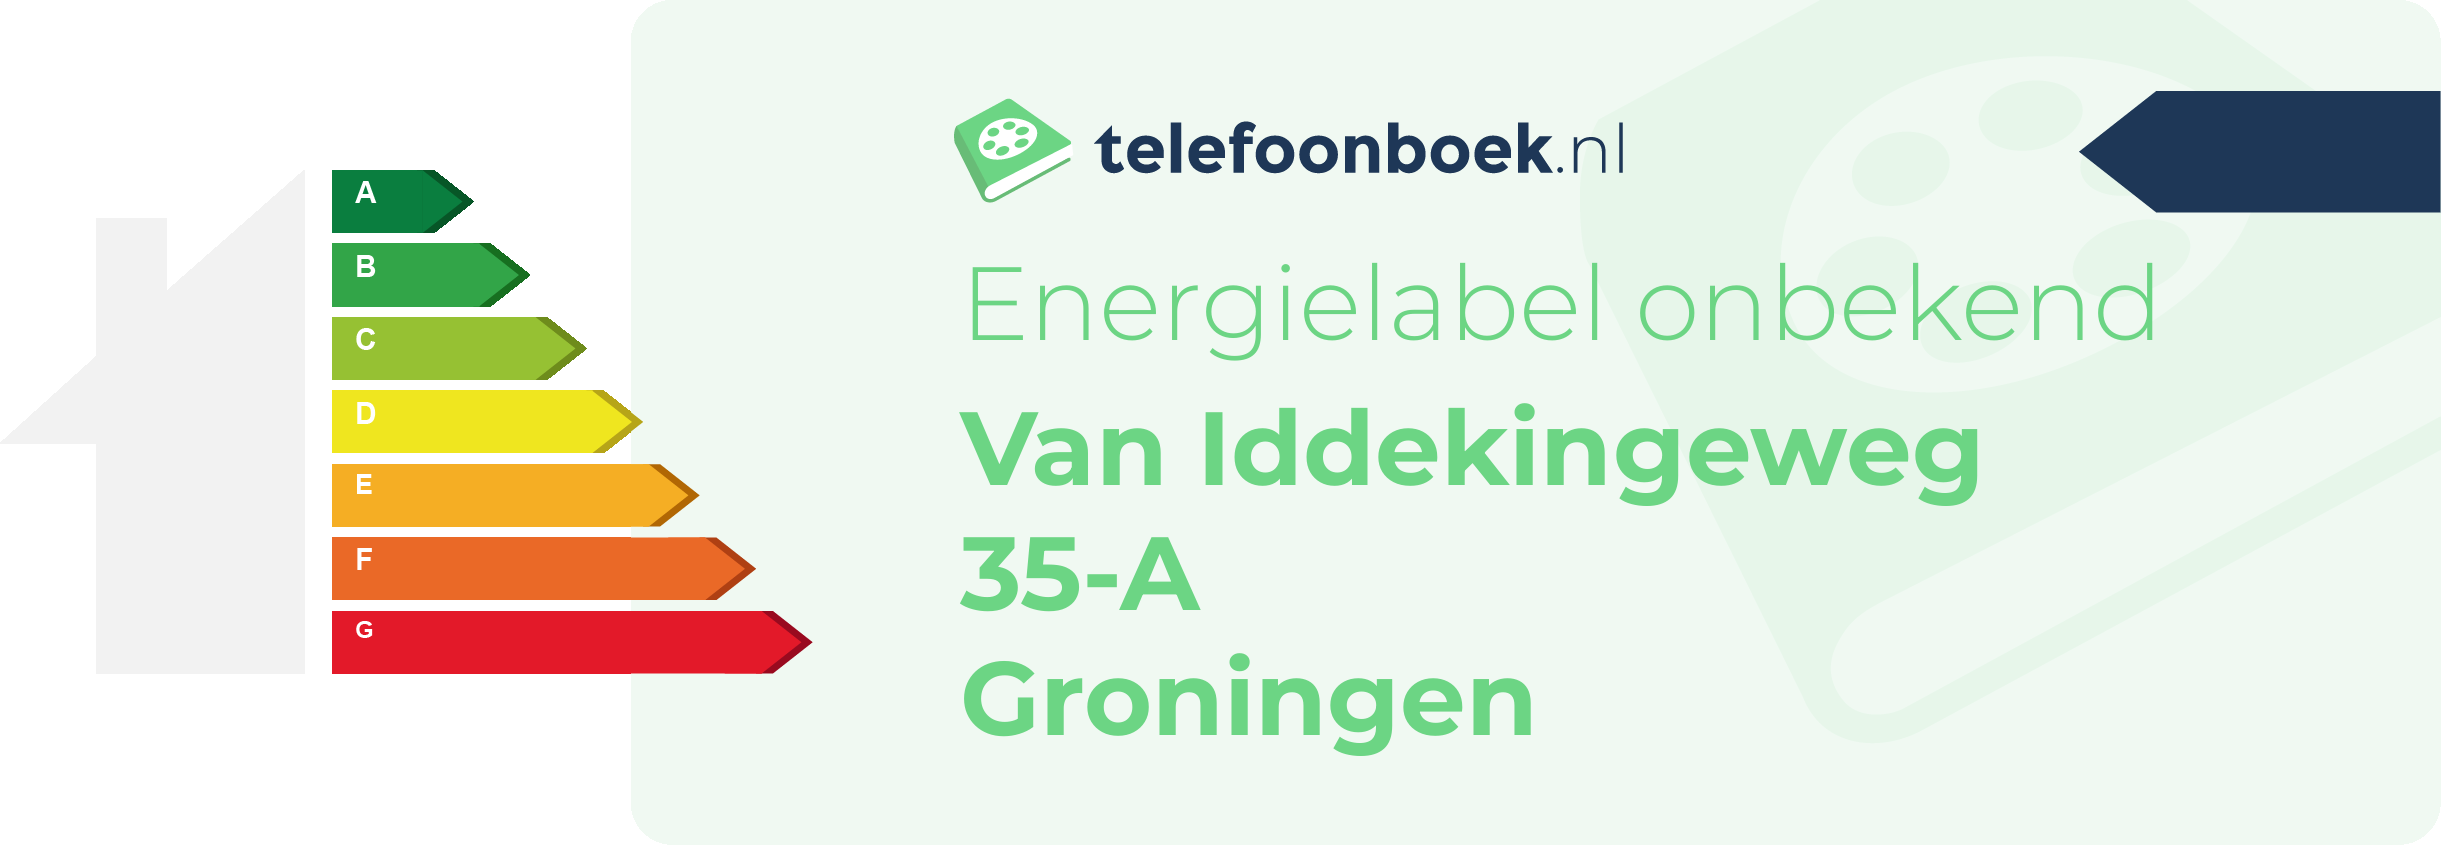 Energielabel Van Iddekingeweg 35-A Groningen